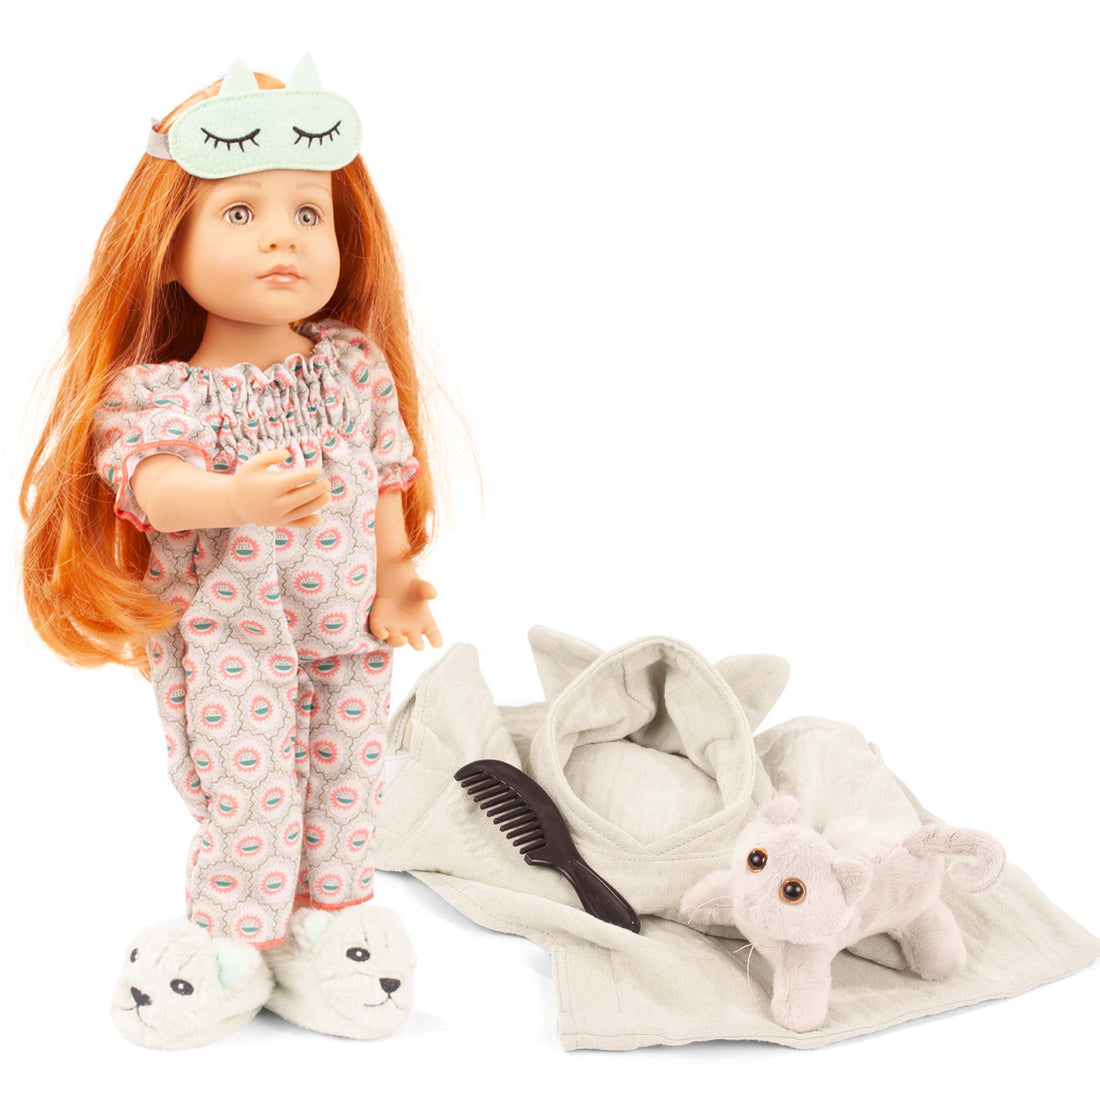 Handcrafted Doll - Little Kidz Götz Girl - Pyjama Party